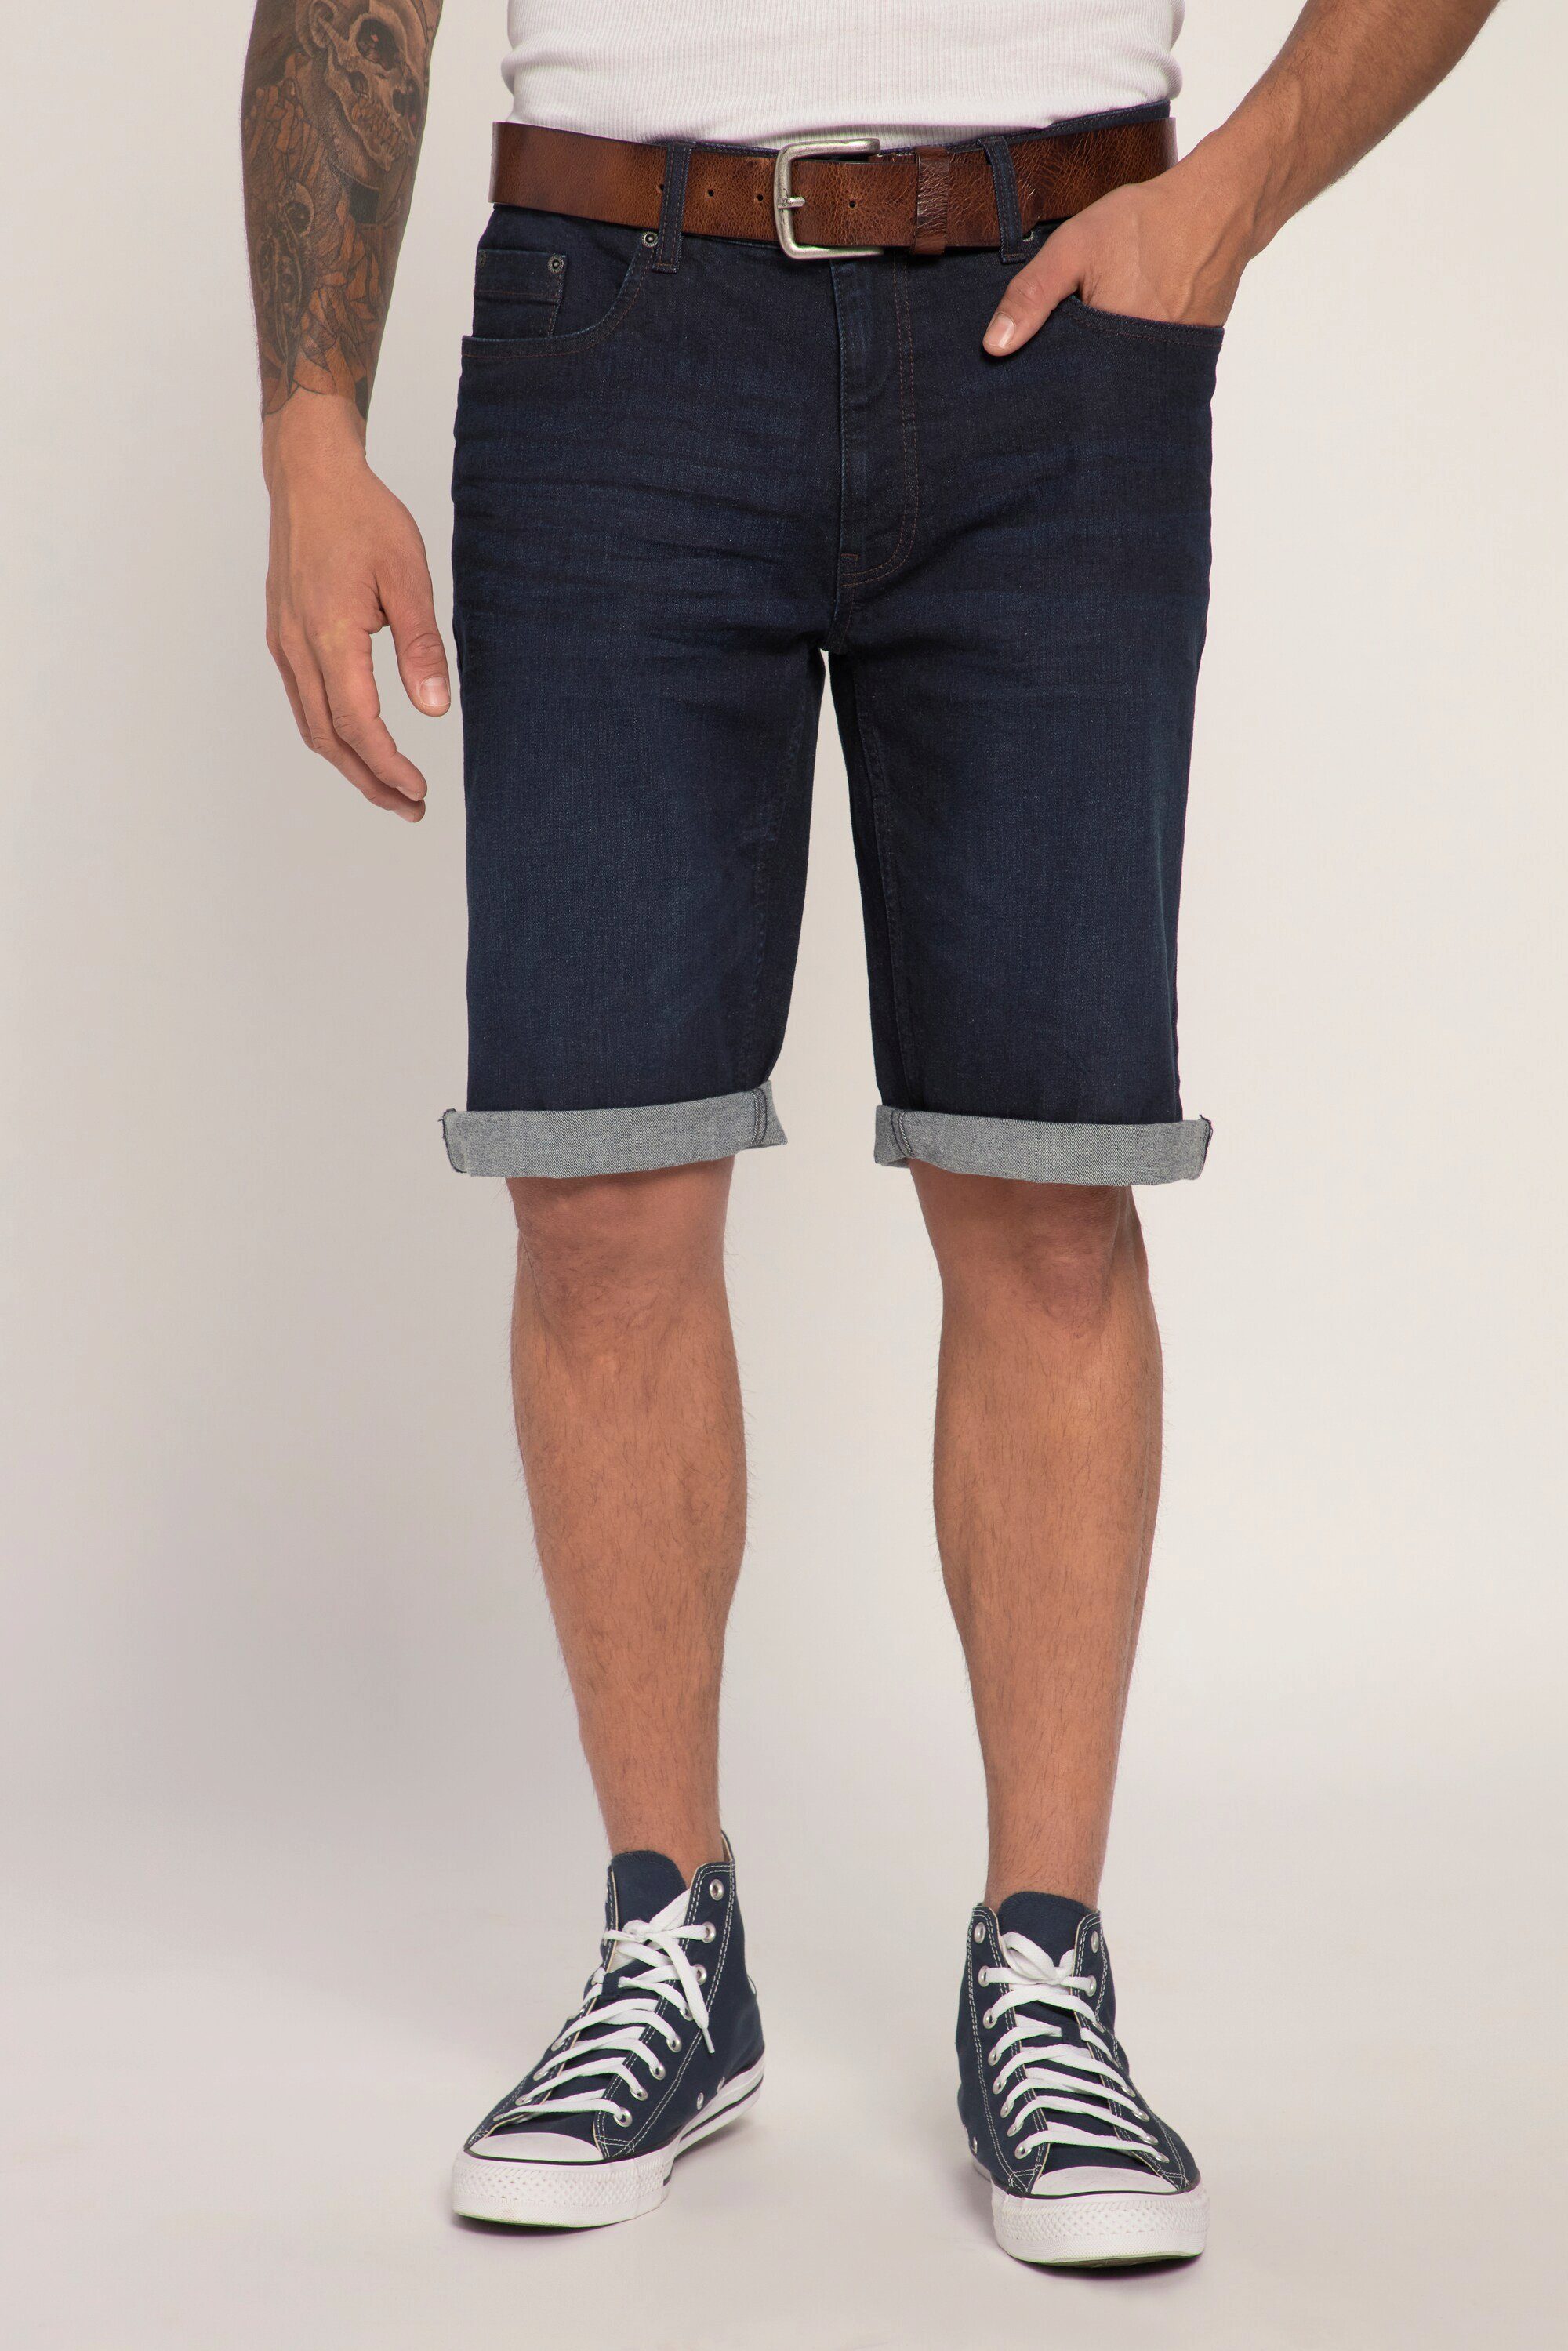 JP1880 Jeansbermudas Bermuda Bauchfit Jeans 5-Pocket High-Stretch dark blue denim | Jeansshorts